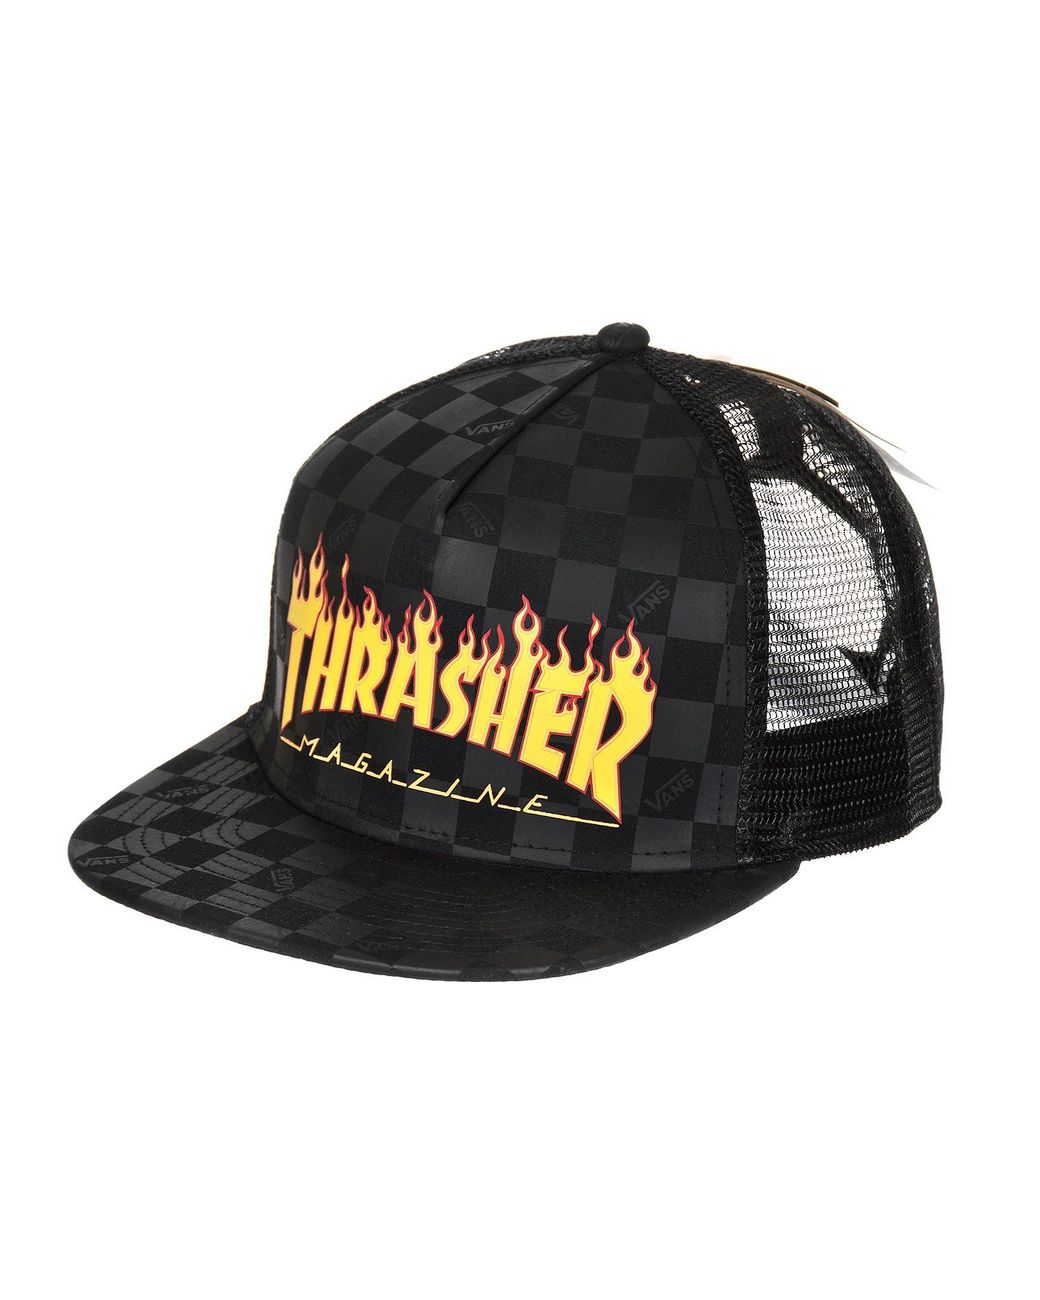 vans x thrasher trucker hat